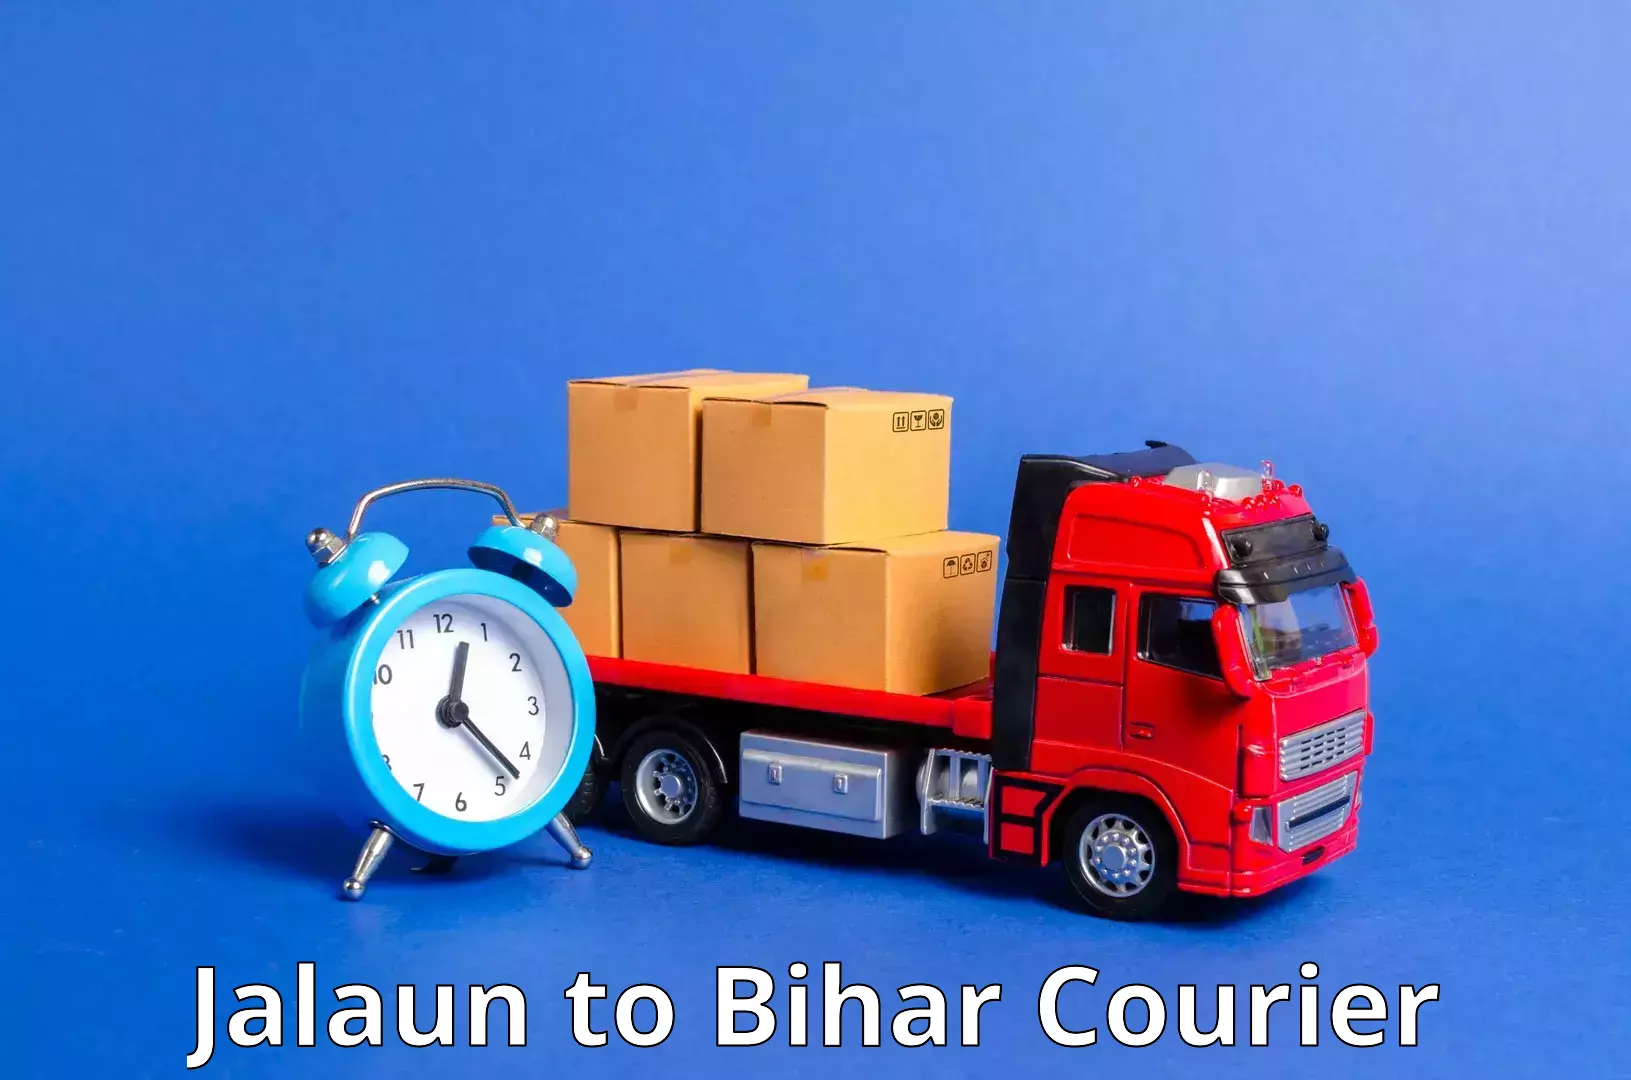 Express delivery network Jalaun to Goh Aurangabad